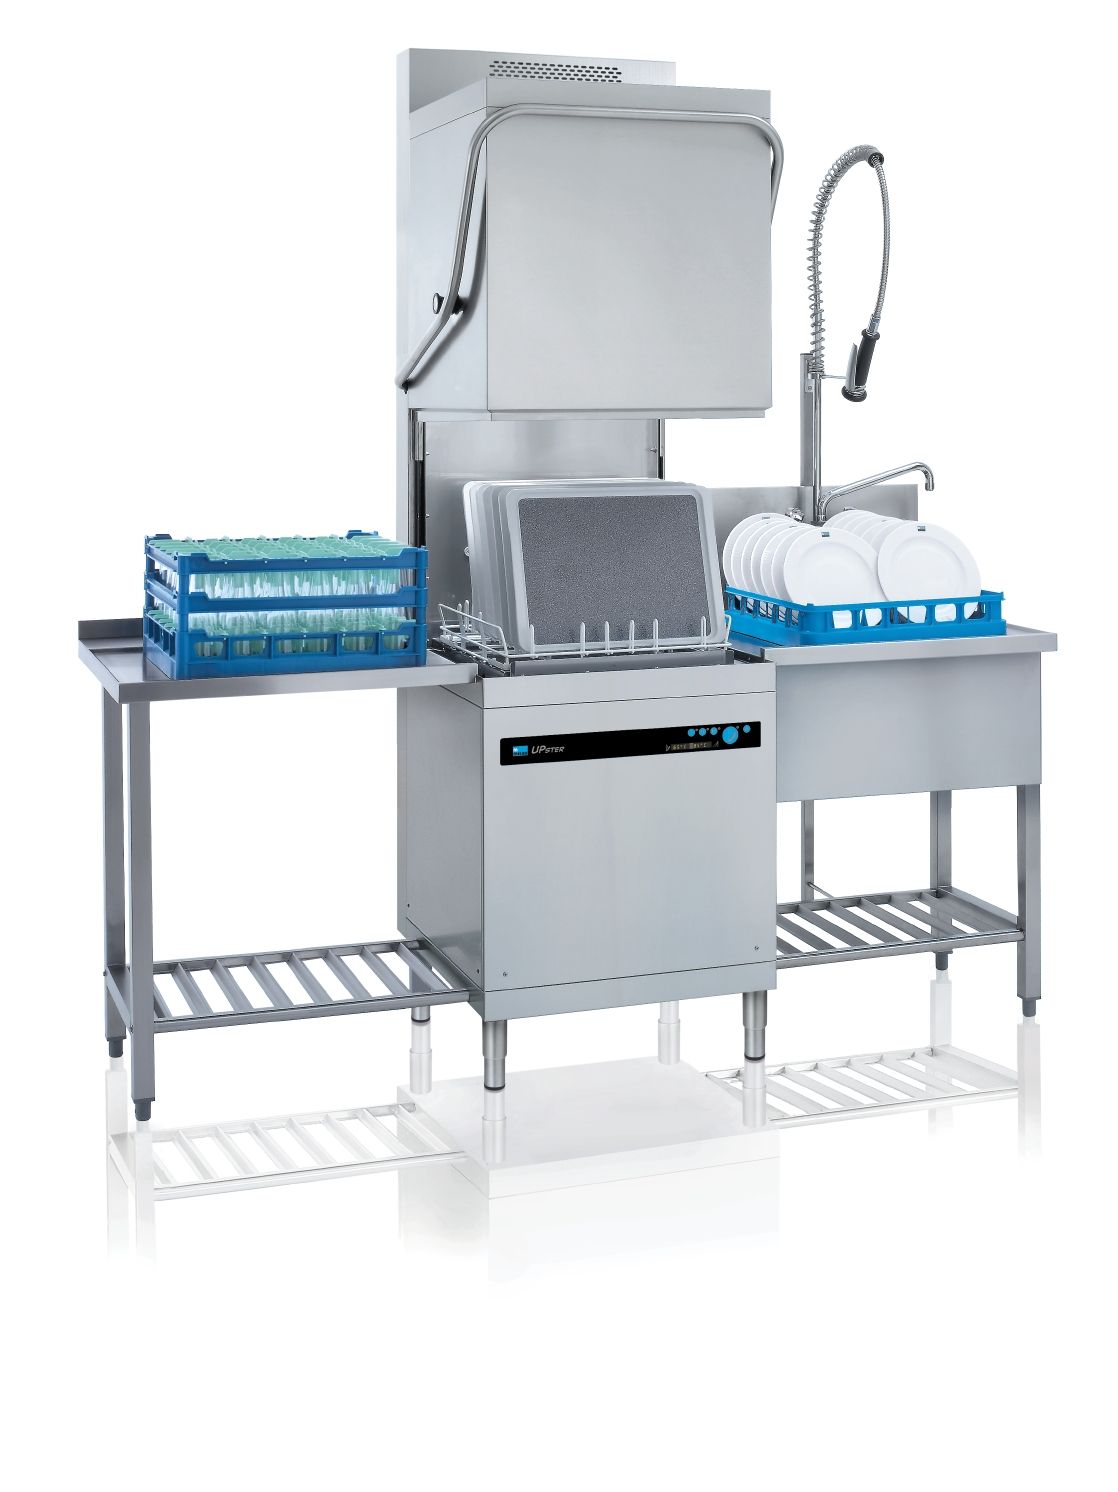 Meiko UPster H500 Pass Through Hood Dishwasher JD Catering Equipment Solutions Ltd